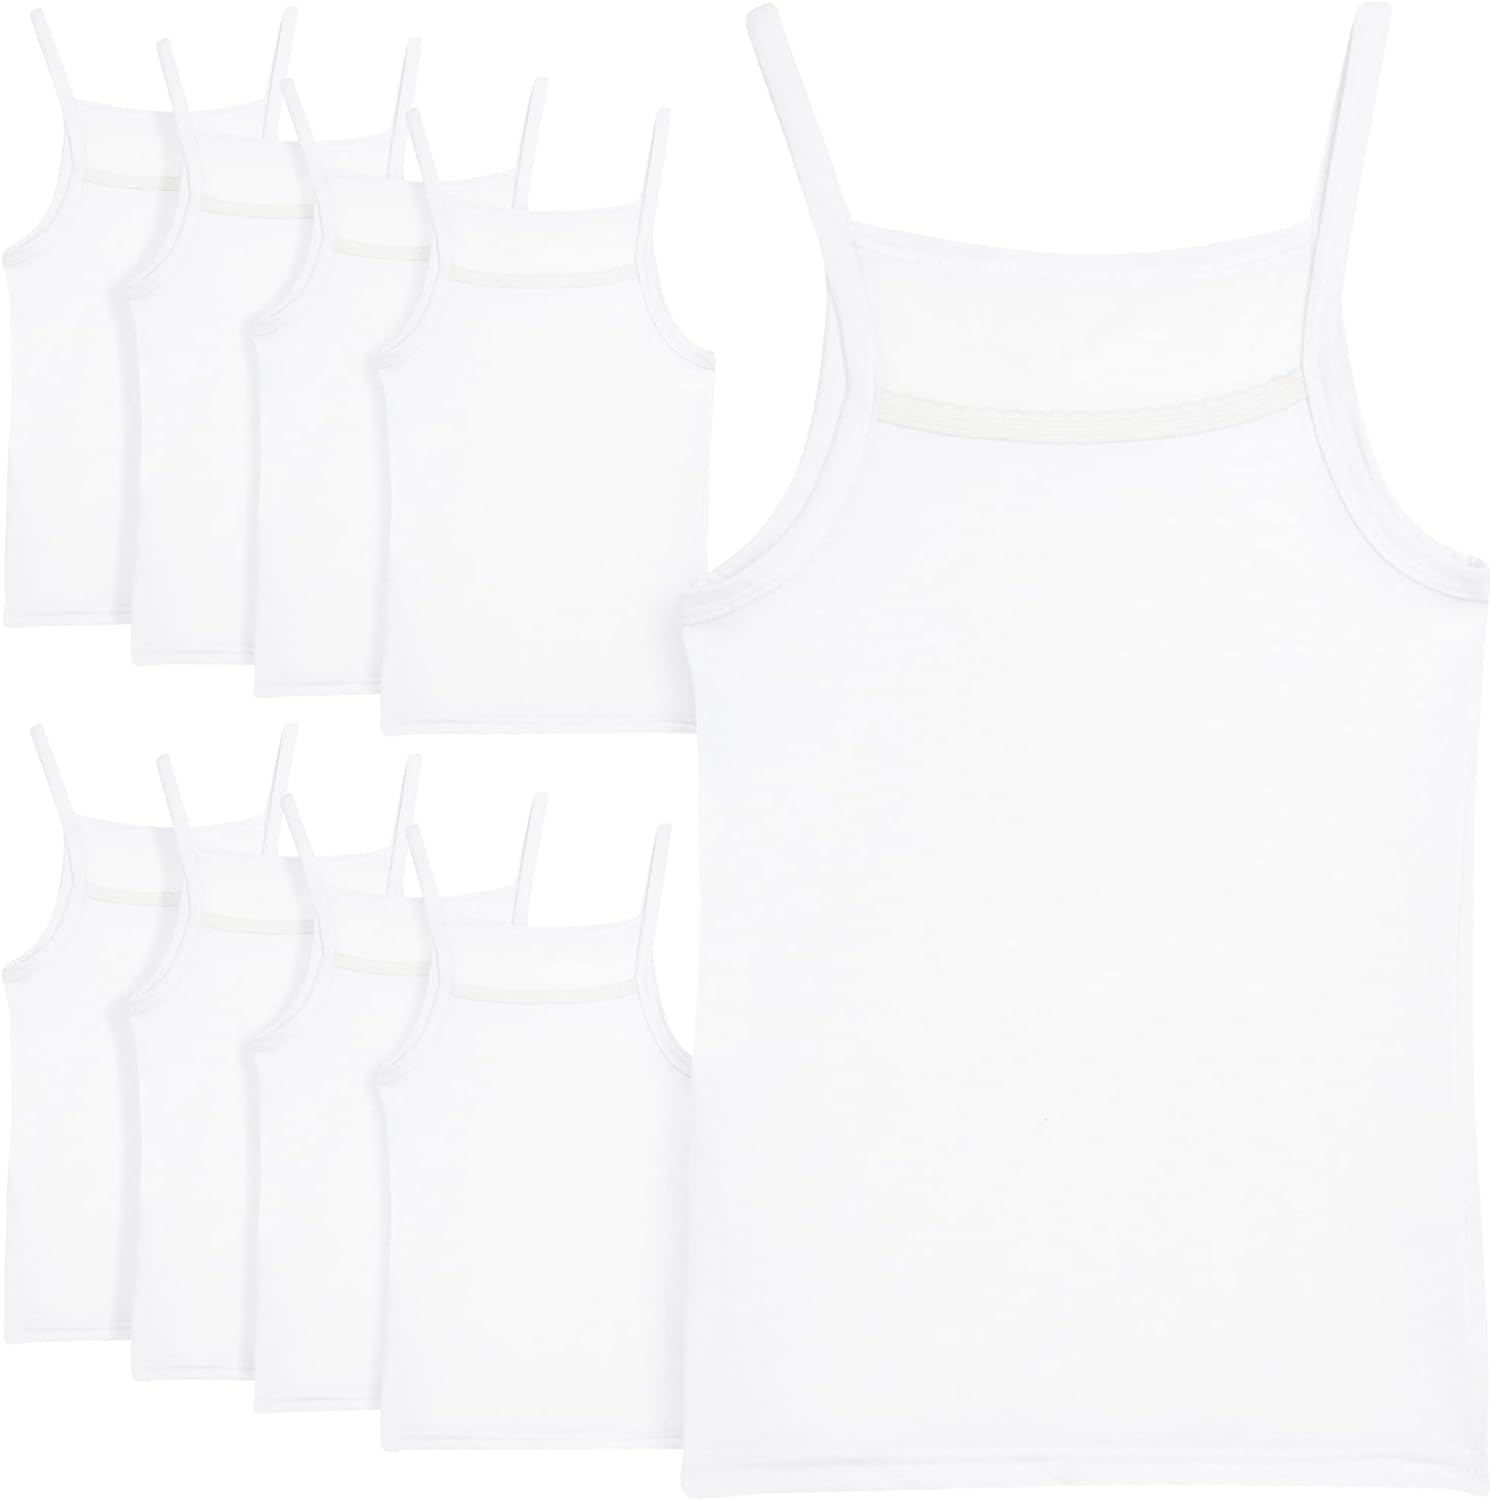 WnderGirl Girls' Undershirt - 9 Pack 100% Cotton Tagless Camisole Tank Top (2T-16)